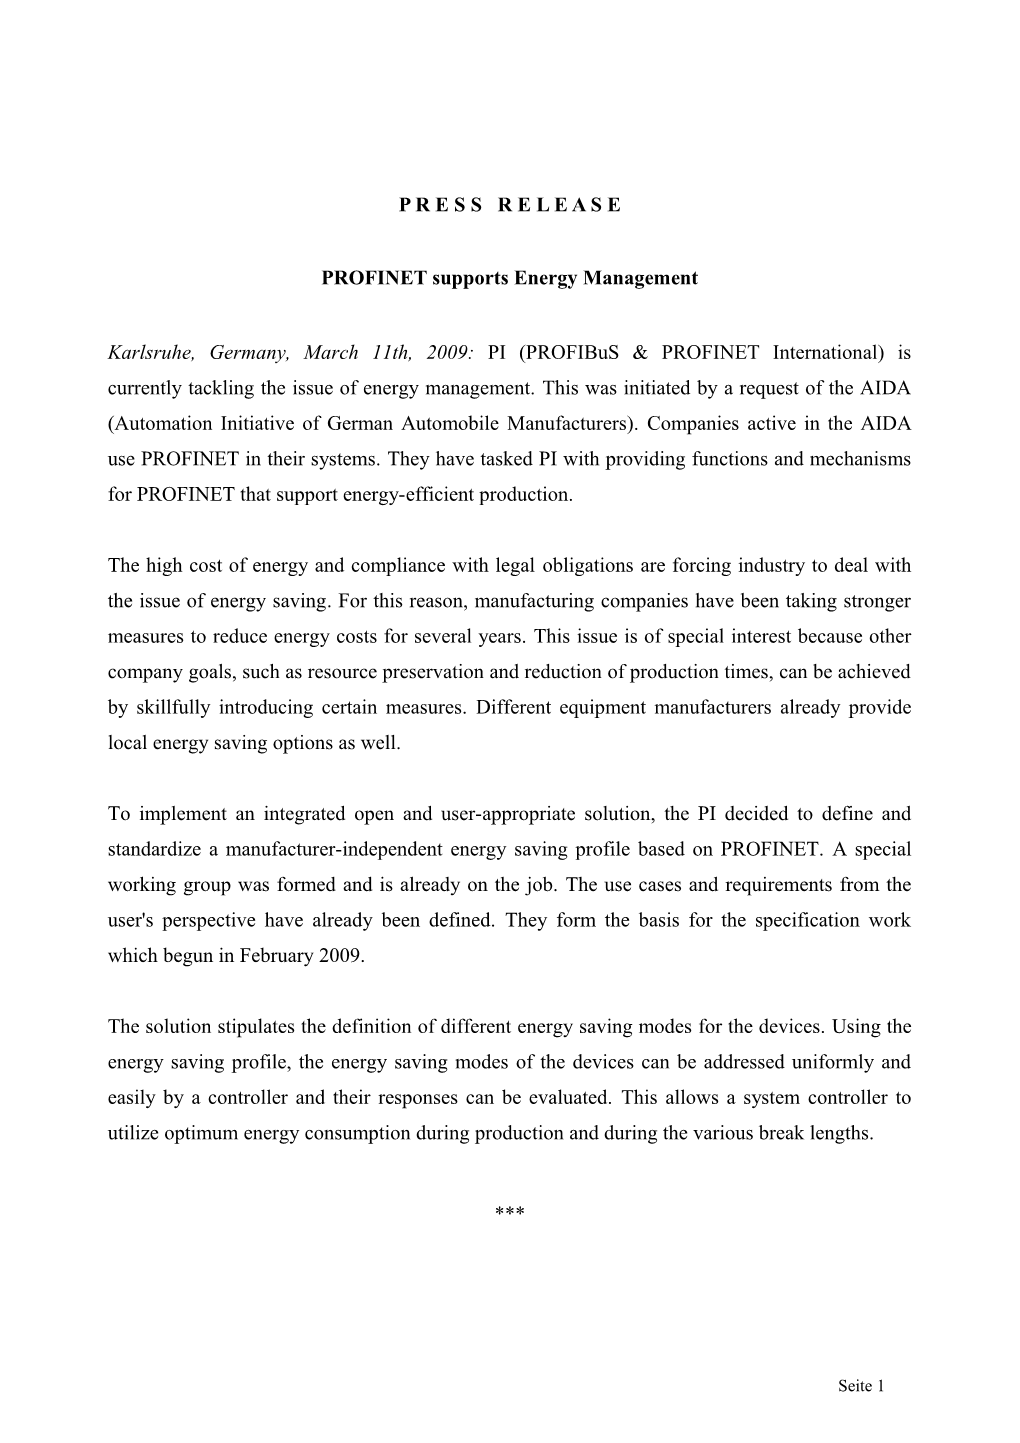 PROFINET Supports Energy Management